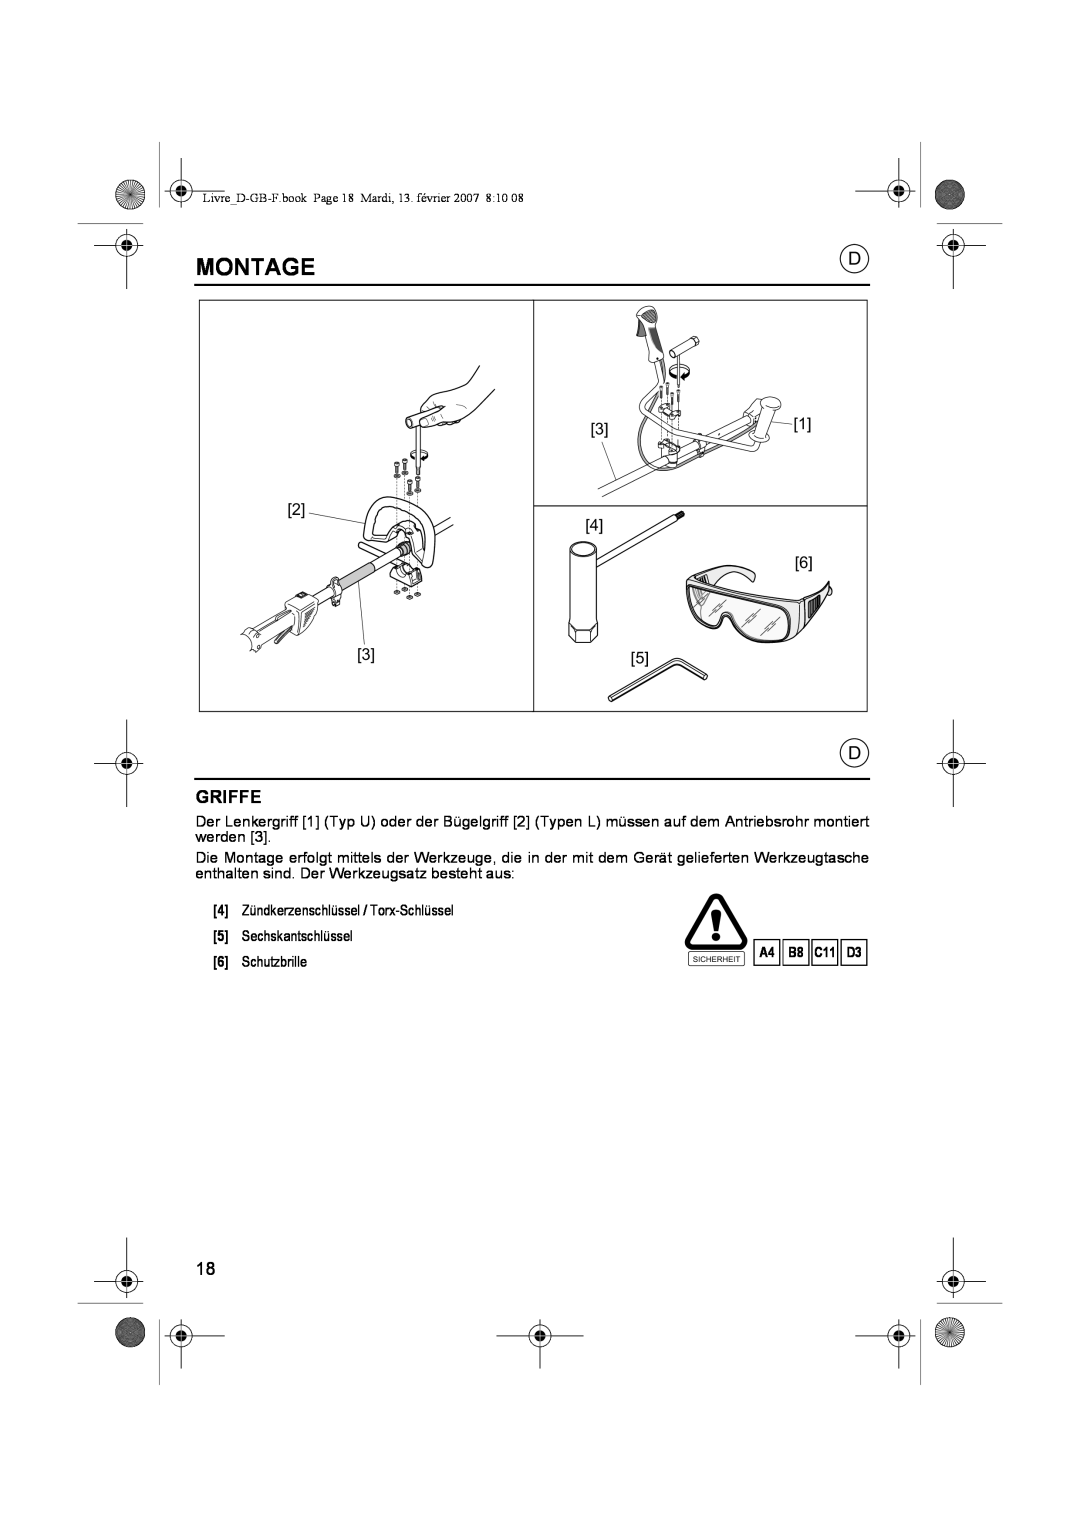 Honda Power Equipment UMK435E Montage, Griffe, A4 B8 C11 D3, LivreD-GB-F.book Page 18 Mardi, 13. février, Sicherheit 